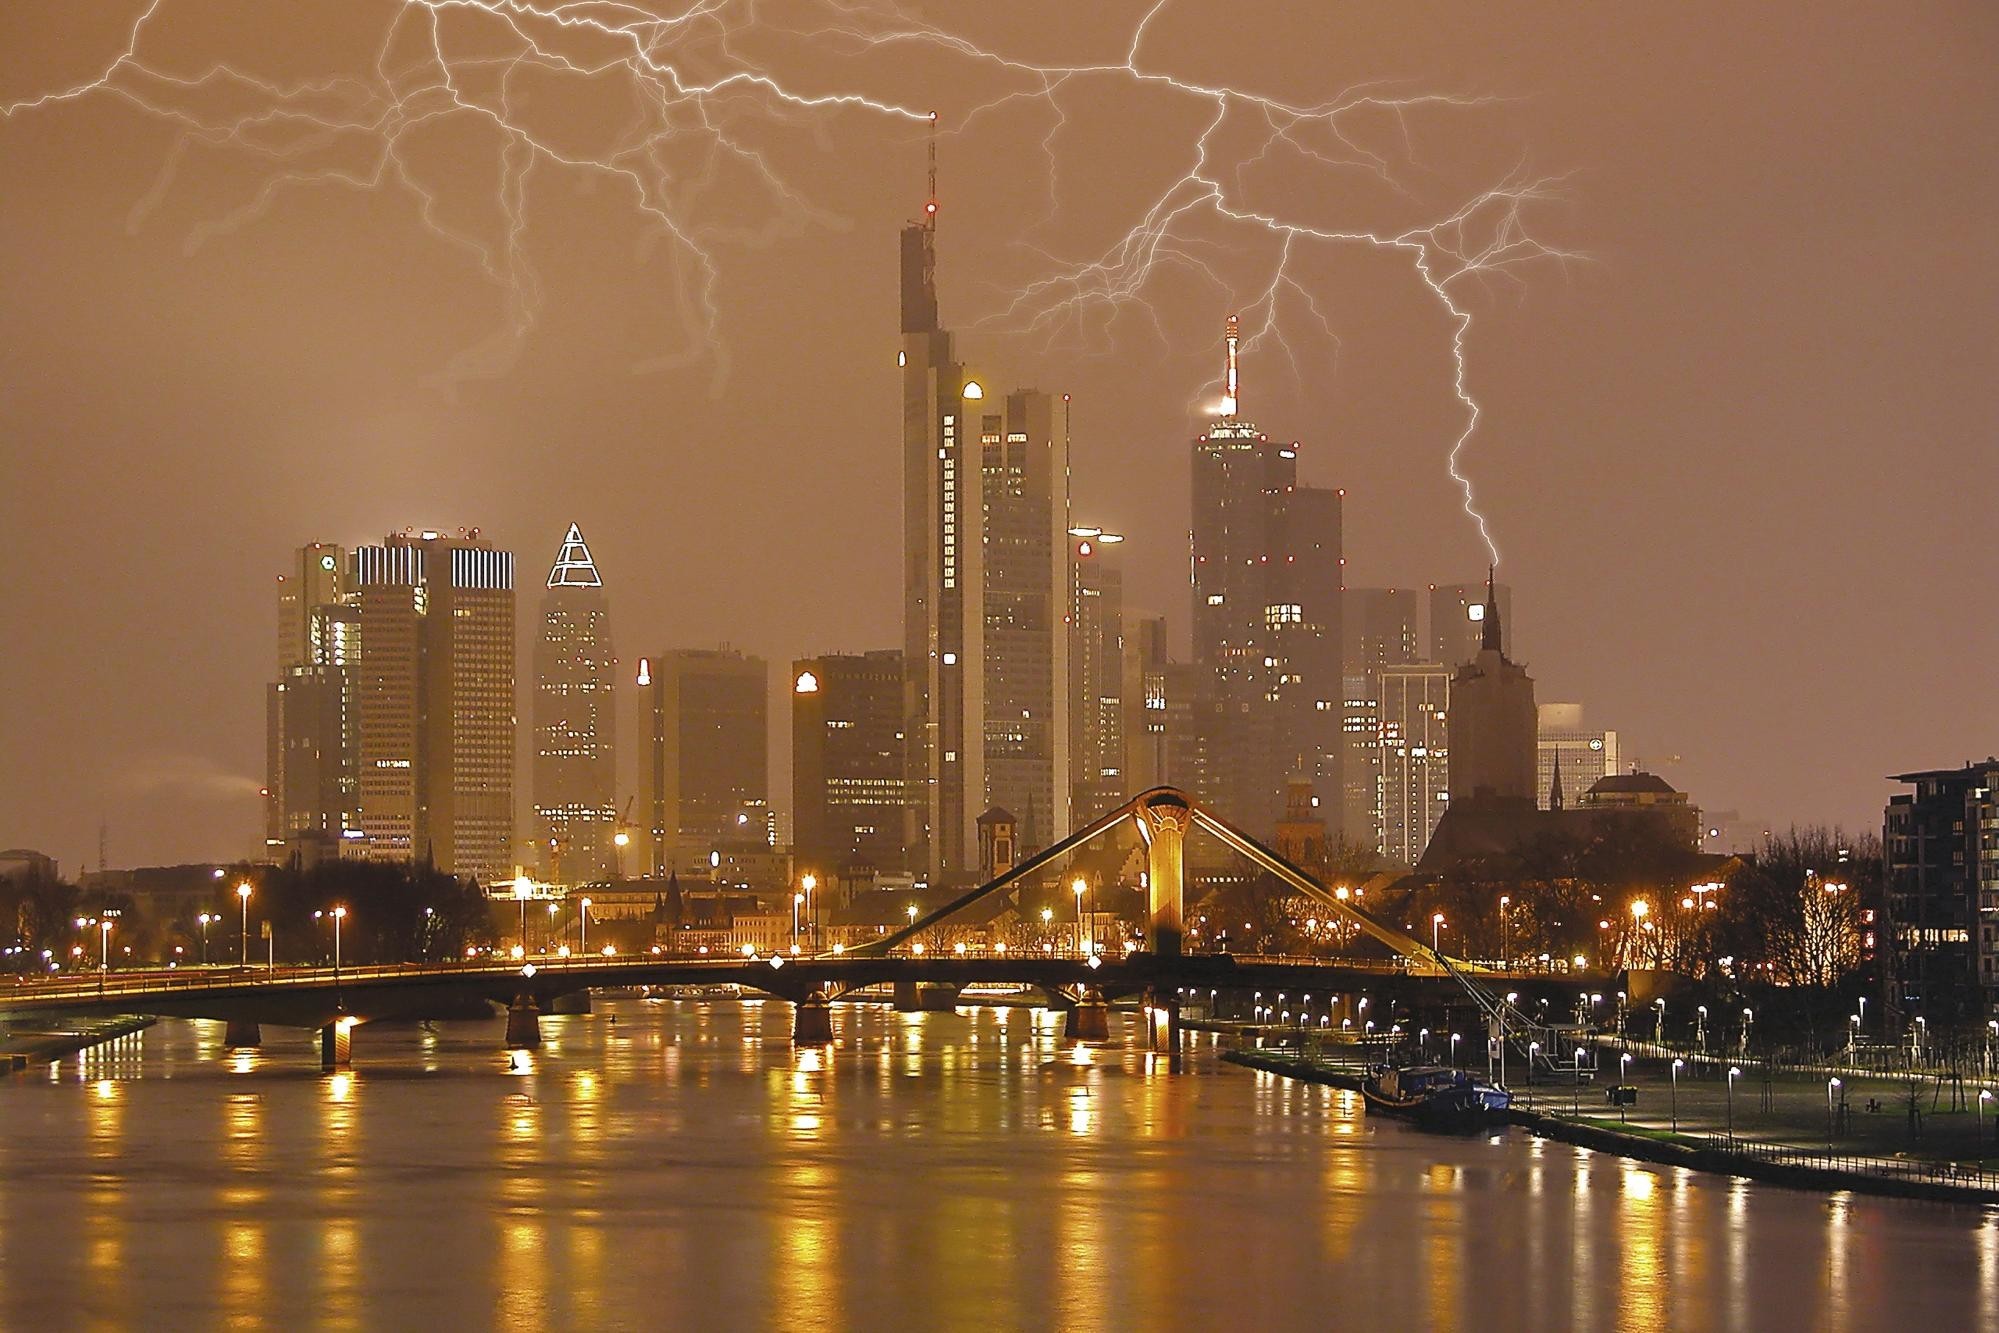 Lightning over Frankfurt, Germany